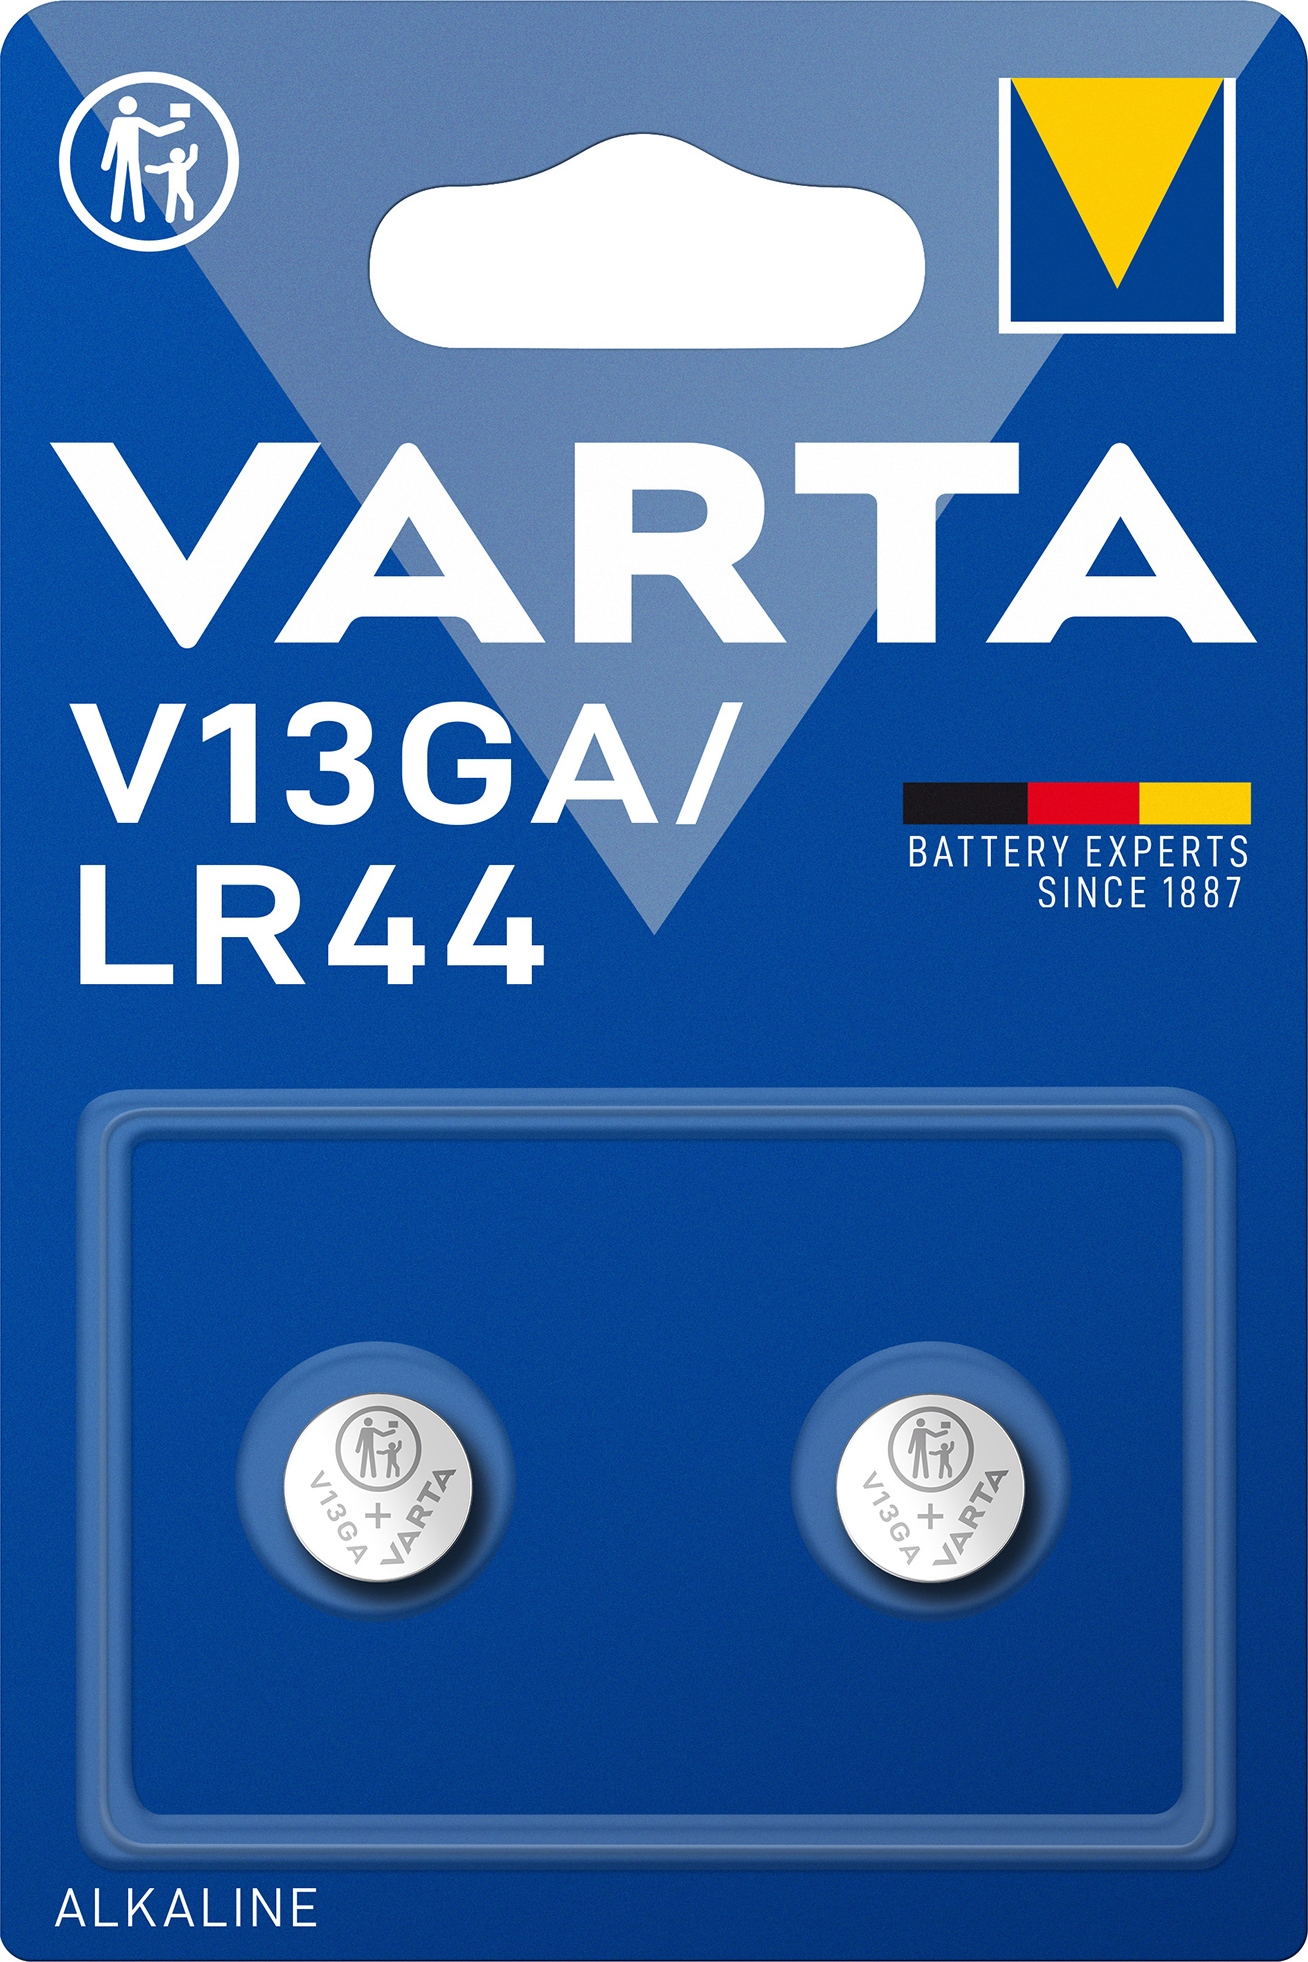 Varta V 13 Ga-batteri (2 stk) thumbnail